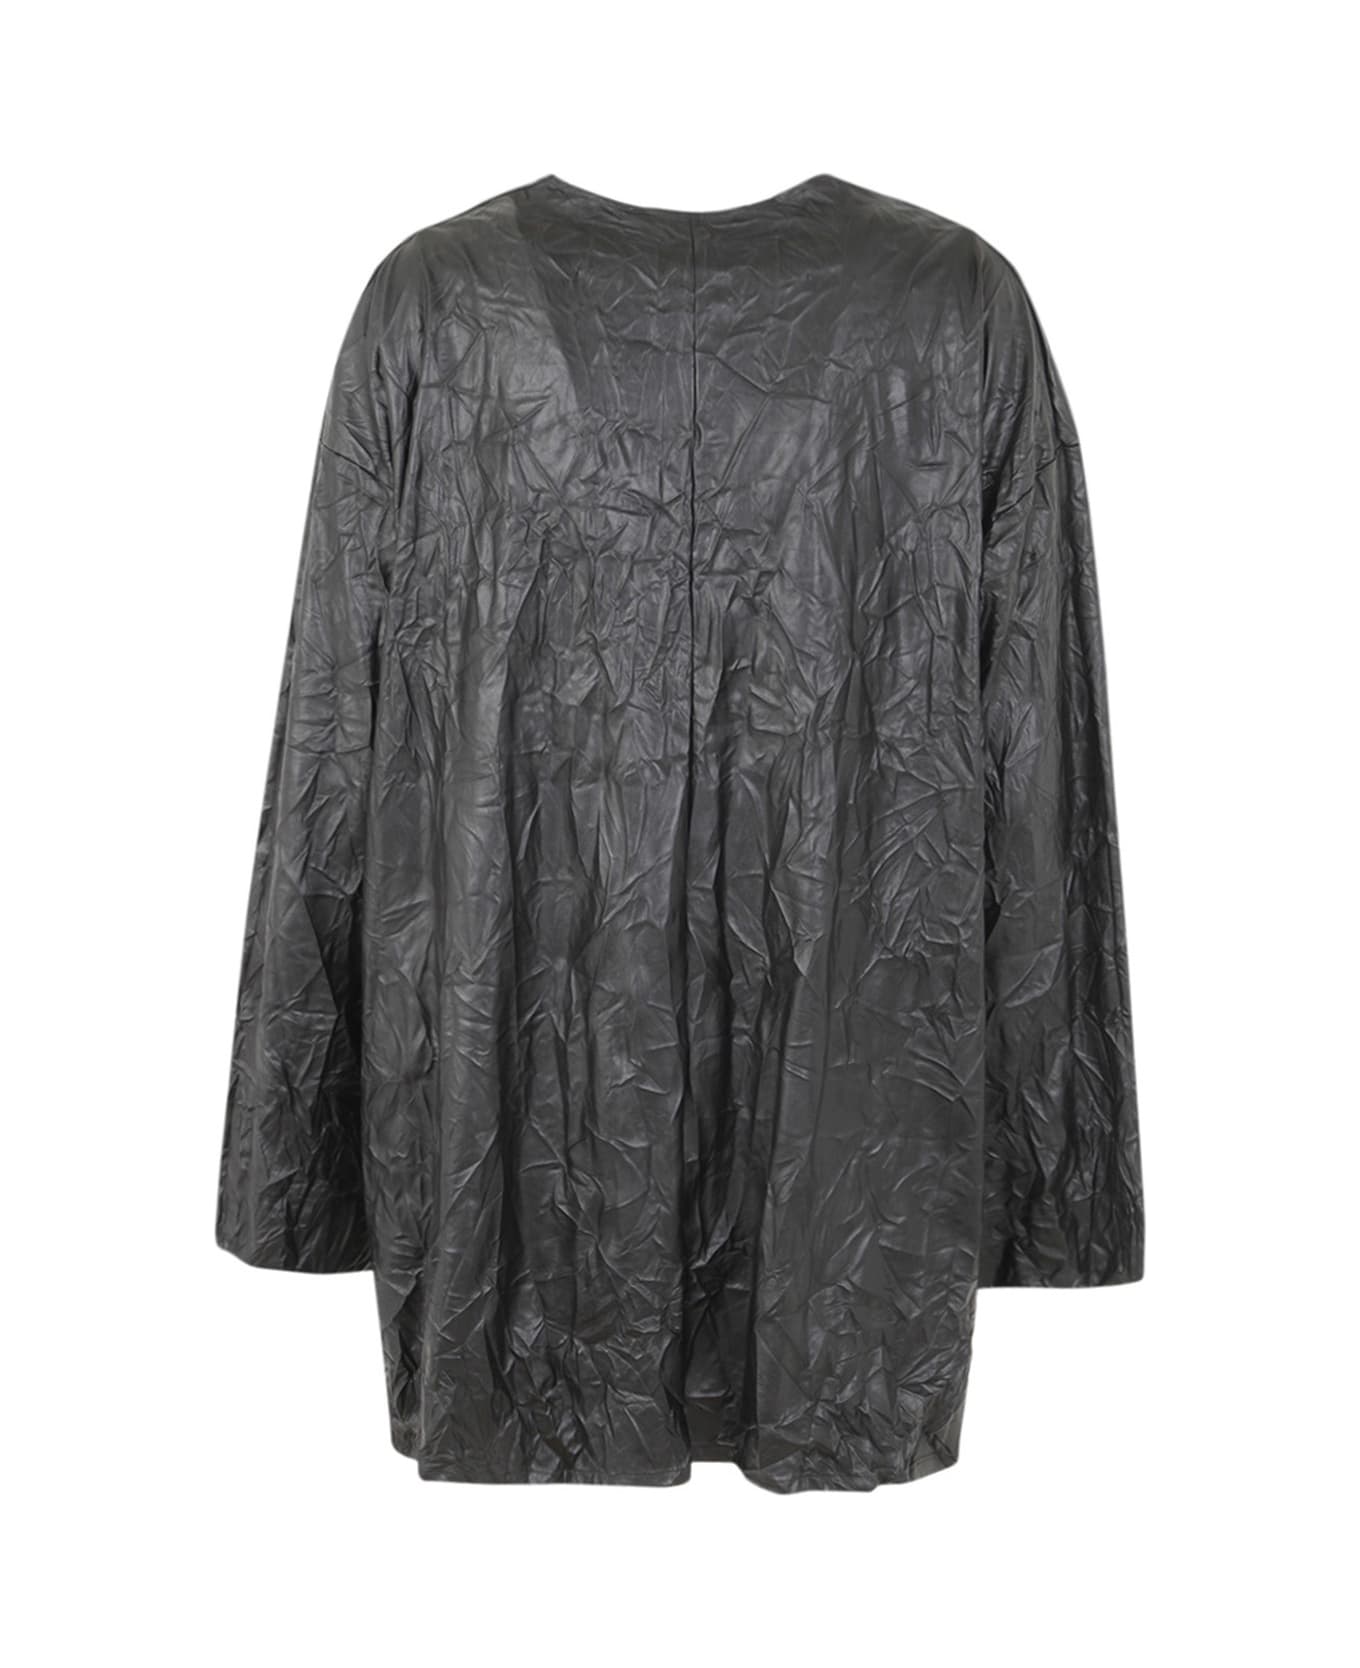 Maria Calderara Crinkled Faux Leather Sweater - Black ニットウェア